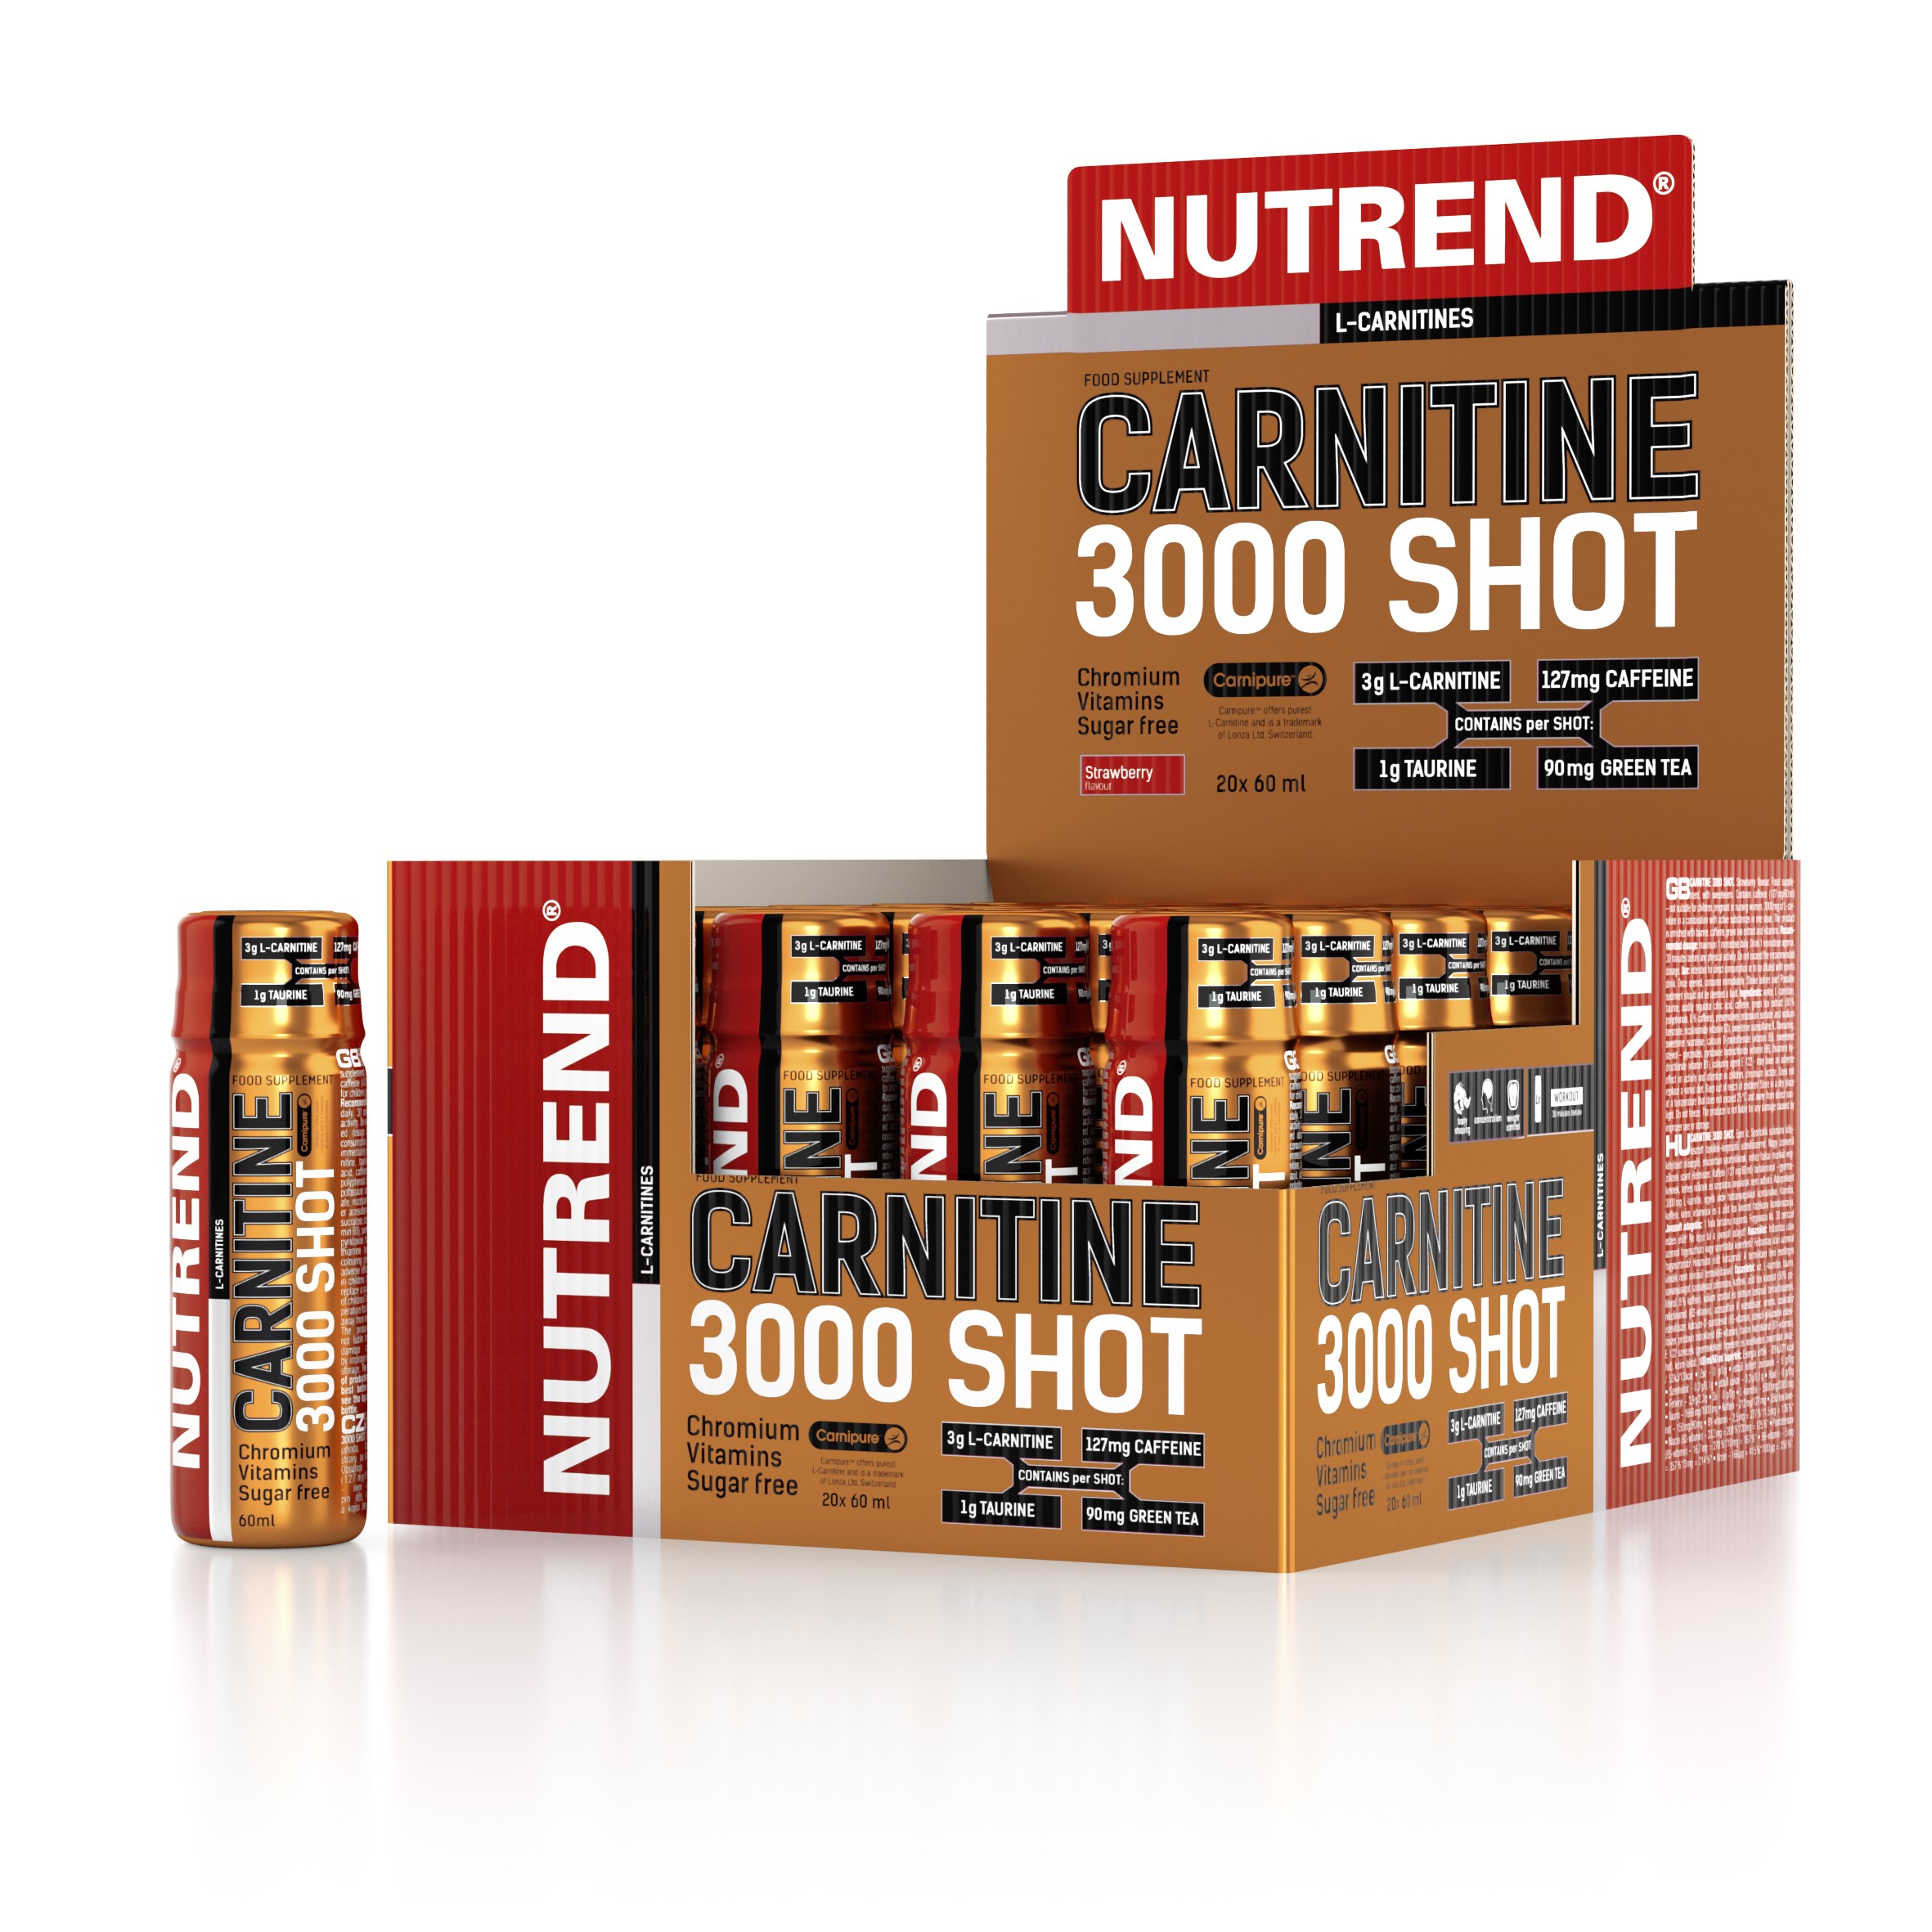 L-Carnitina - CARNITINE 3000 SHOT 60 ml Strawberry, advancednutrition.ro